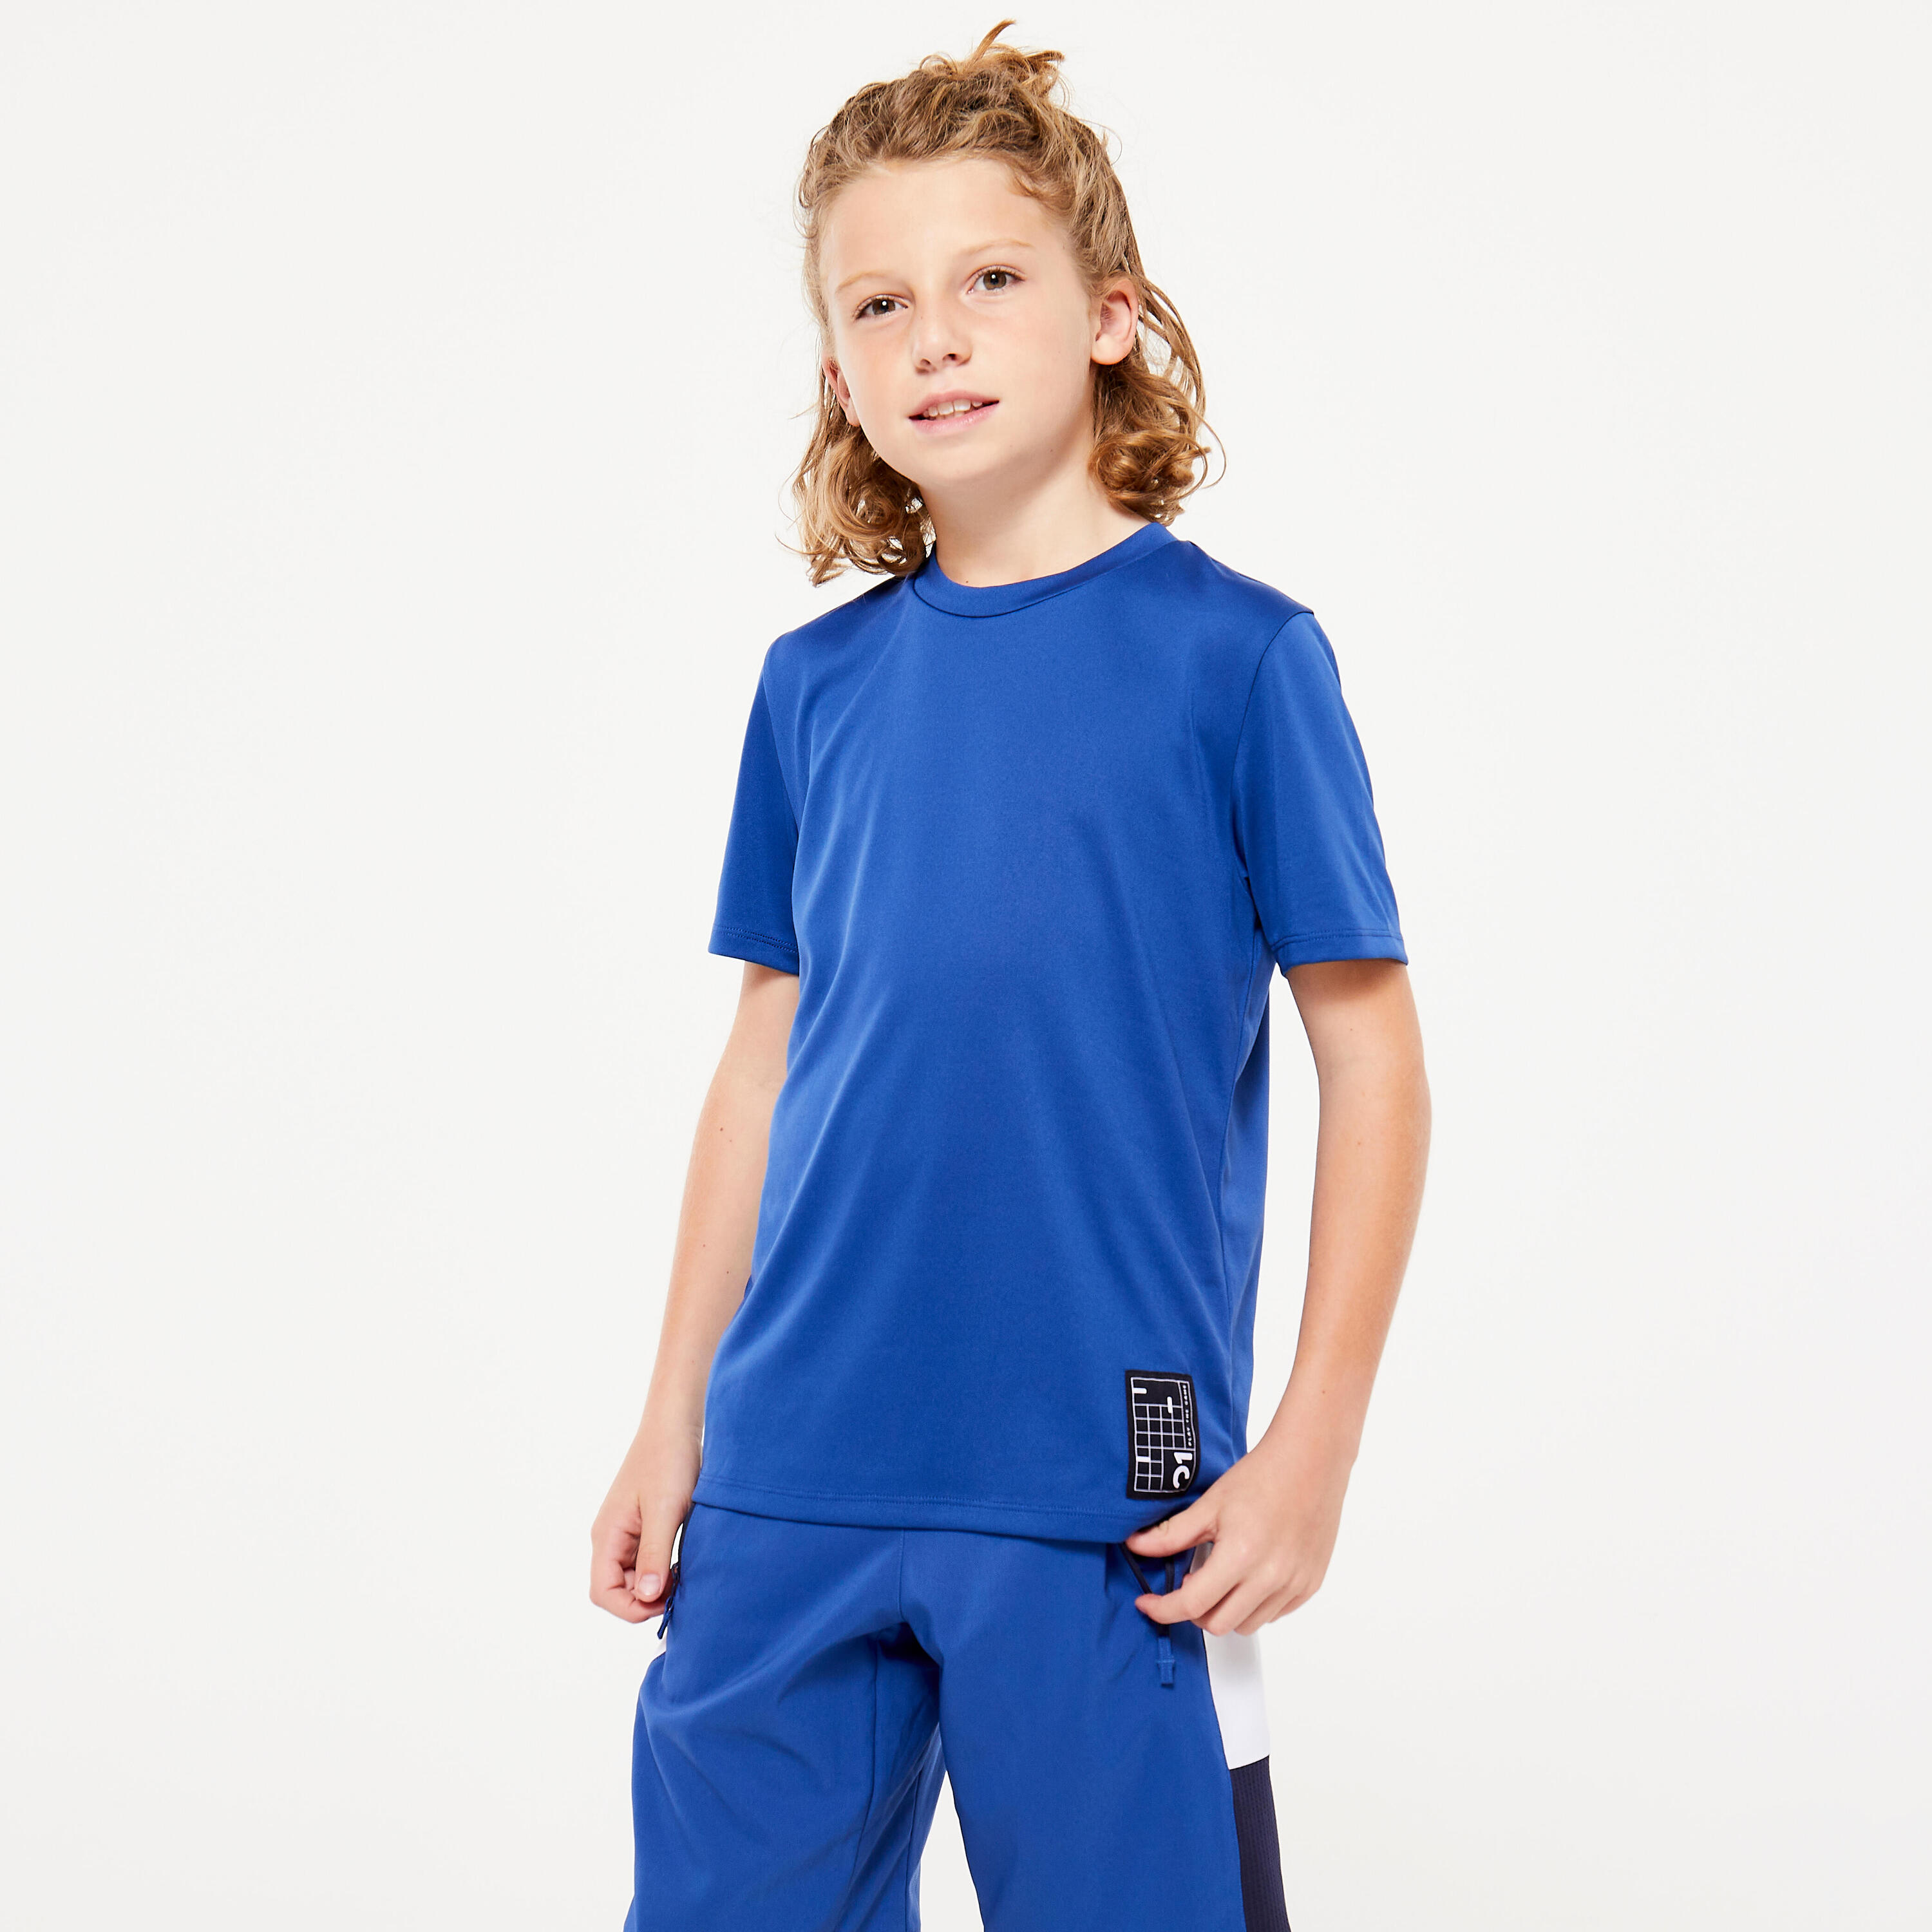 DECATHLON Kids' Breathable T-Shirt - Blue